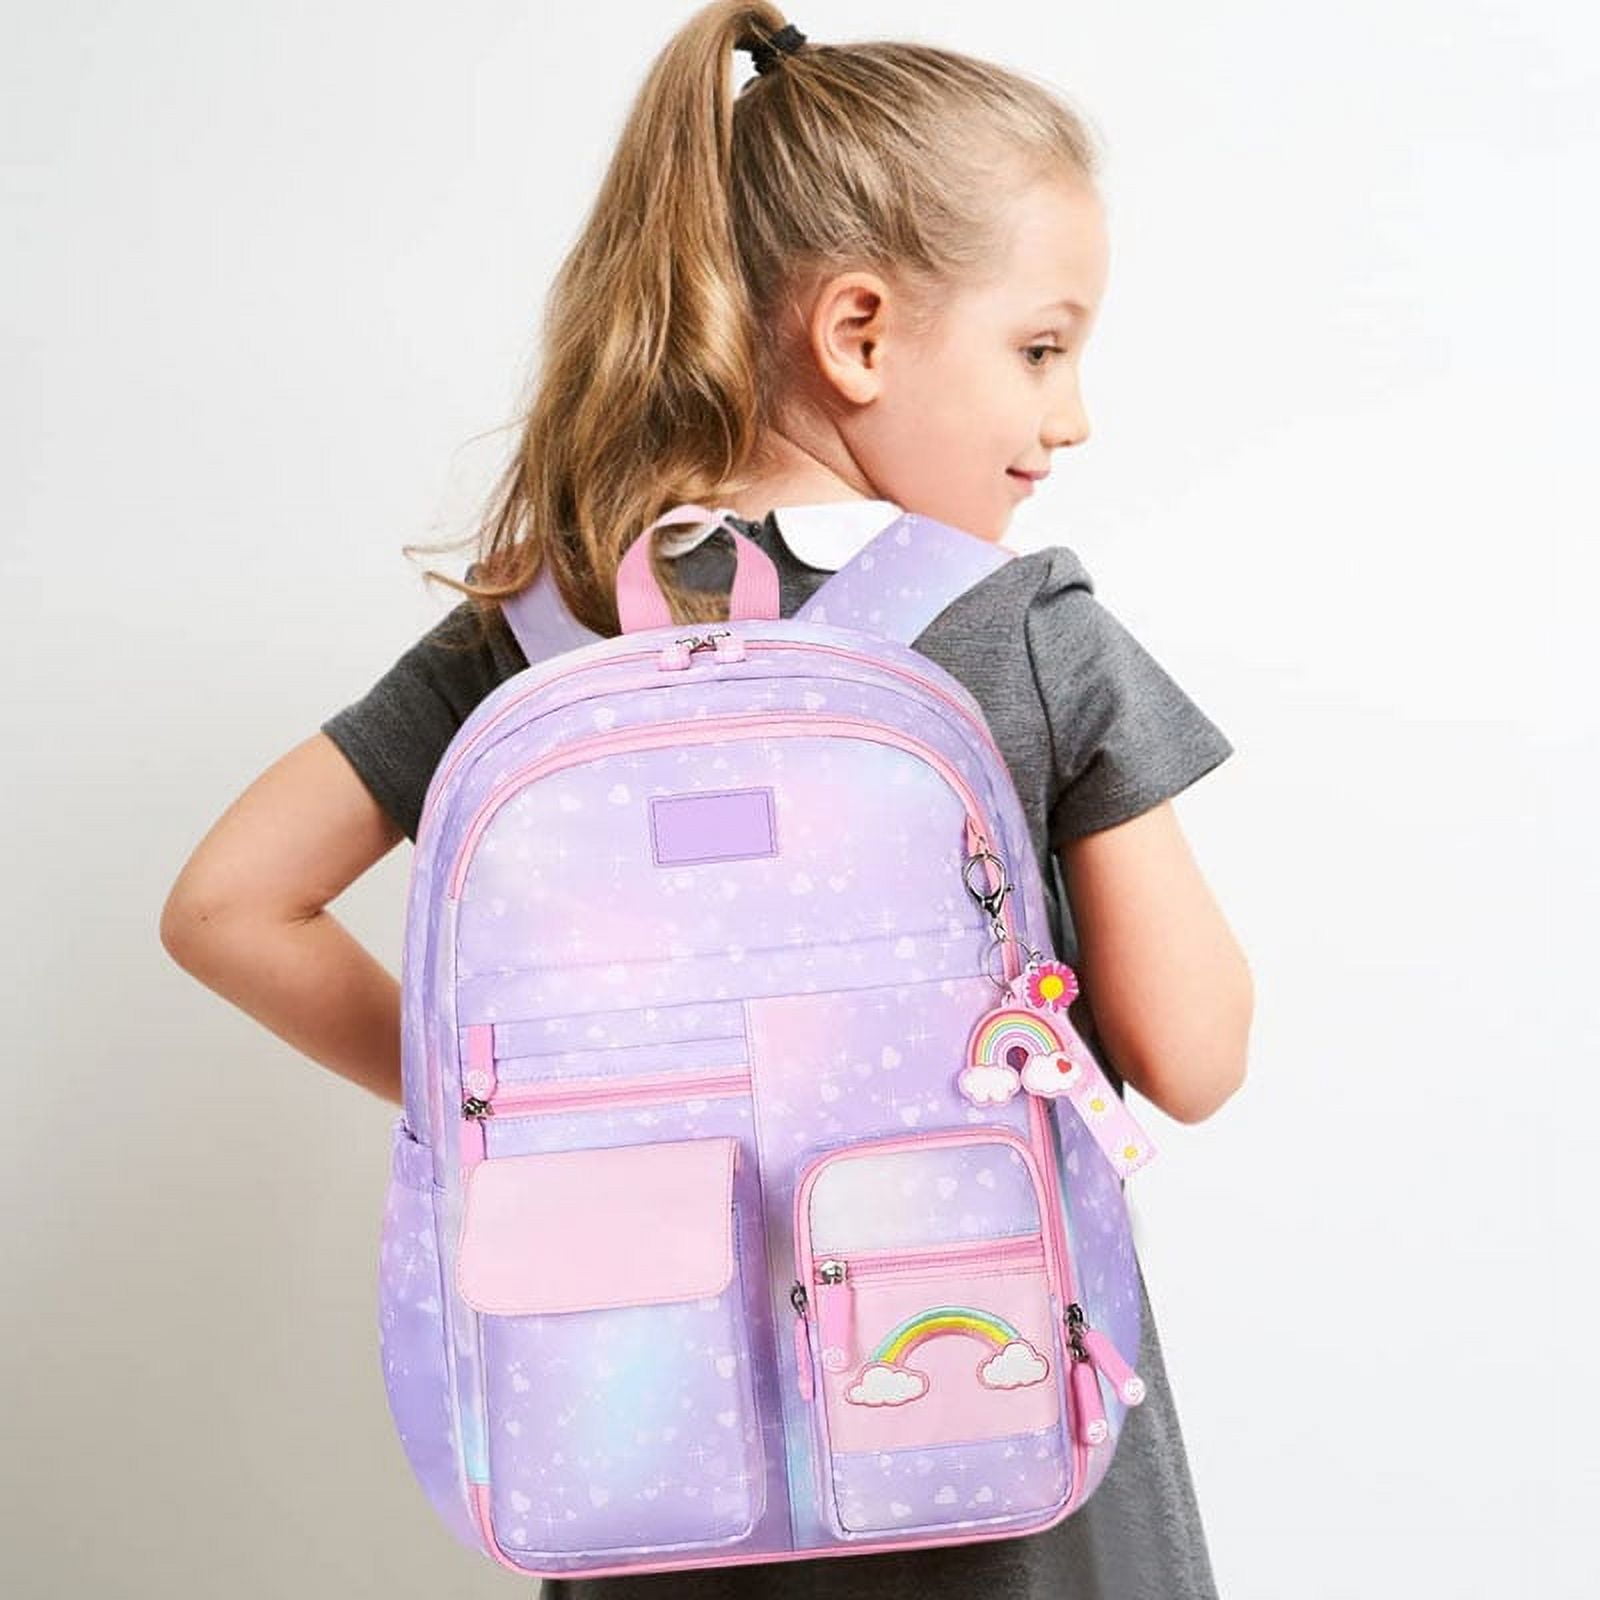 InduSKY Kids Backpack Girls Backpack, Cute Elementary School Backpacks for  Teen Girls, Waterproof Lightweight Middle School Bookbags School Casual